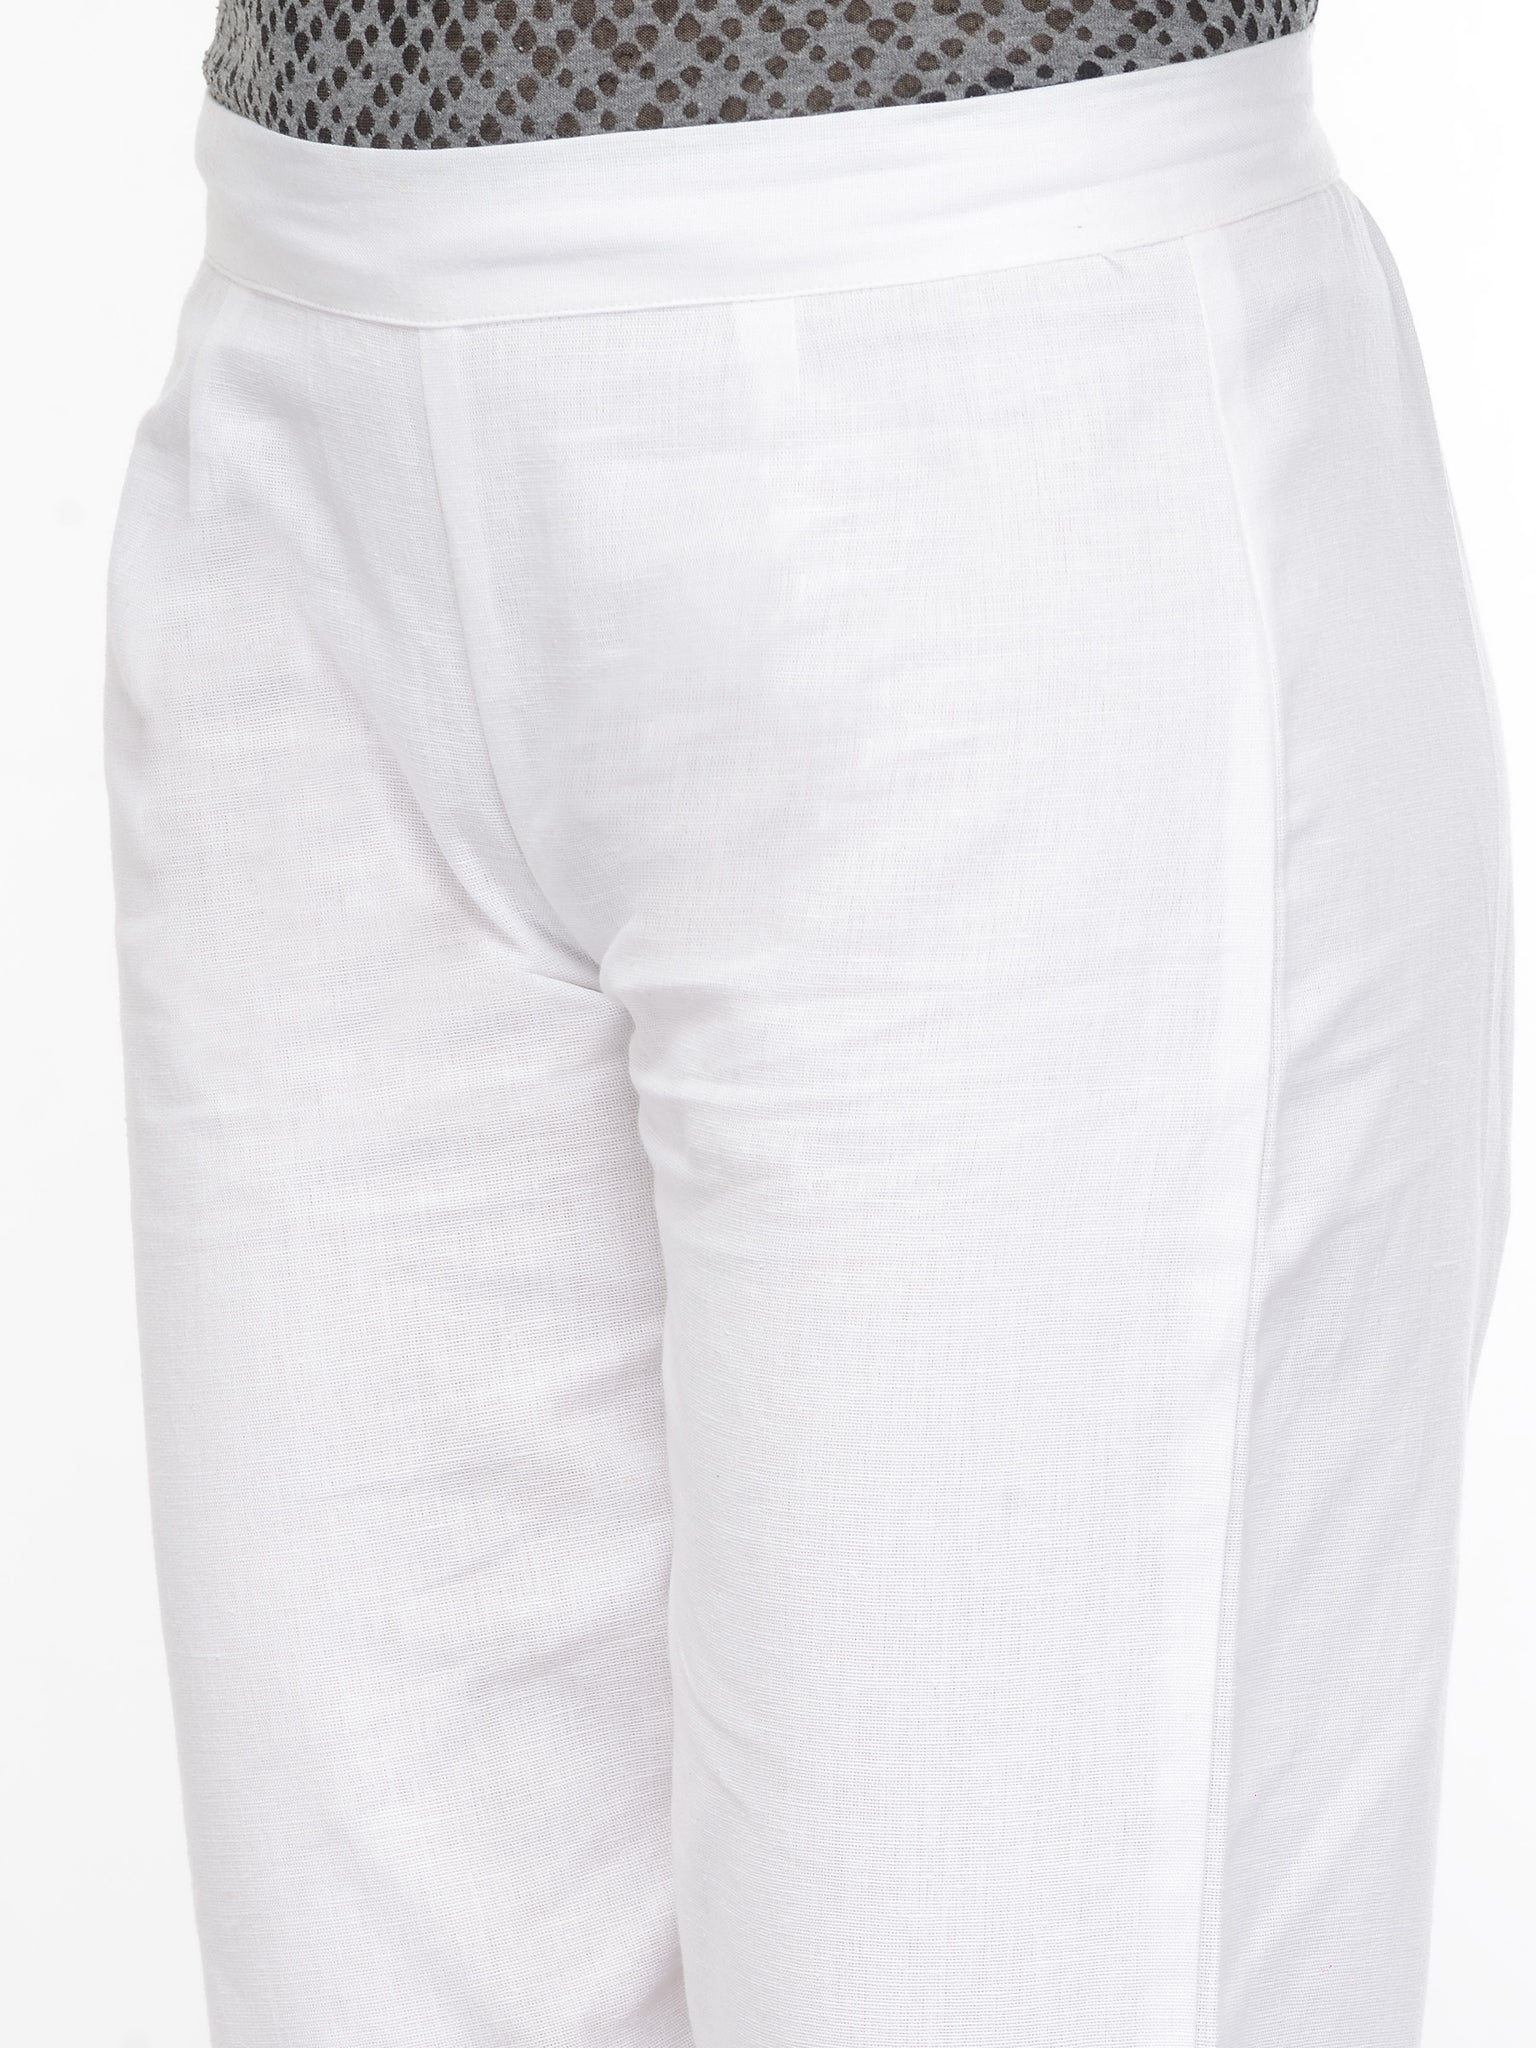 Printed Tunic & White Trouser Set (Sku- BLMD21SP26).